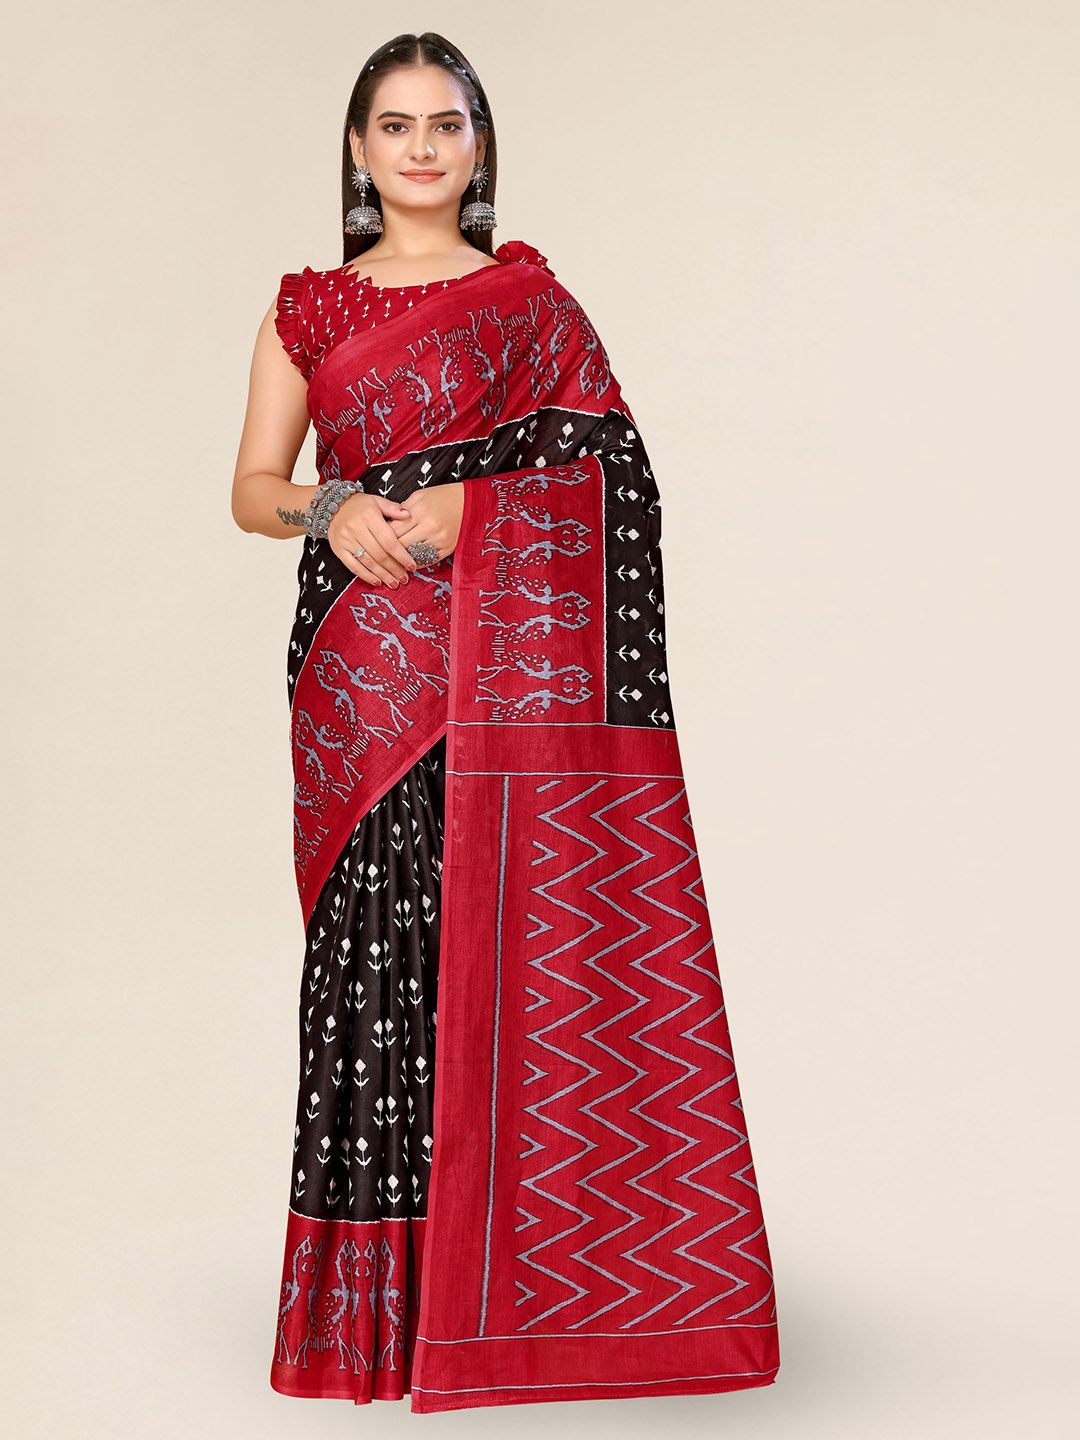 DIVASTRI Black & Red Floral Kota Saree Price in India